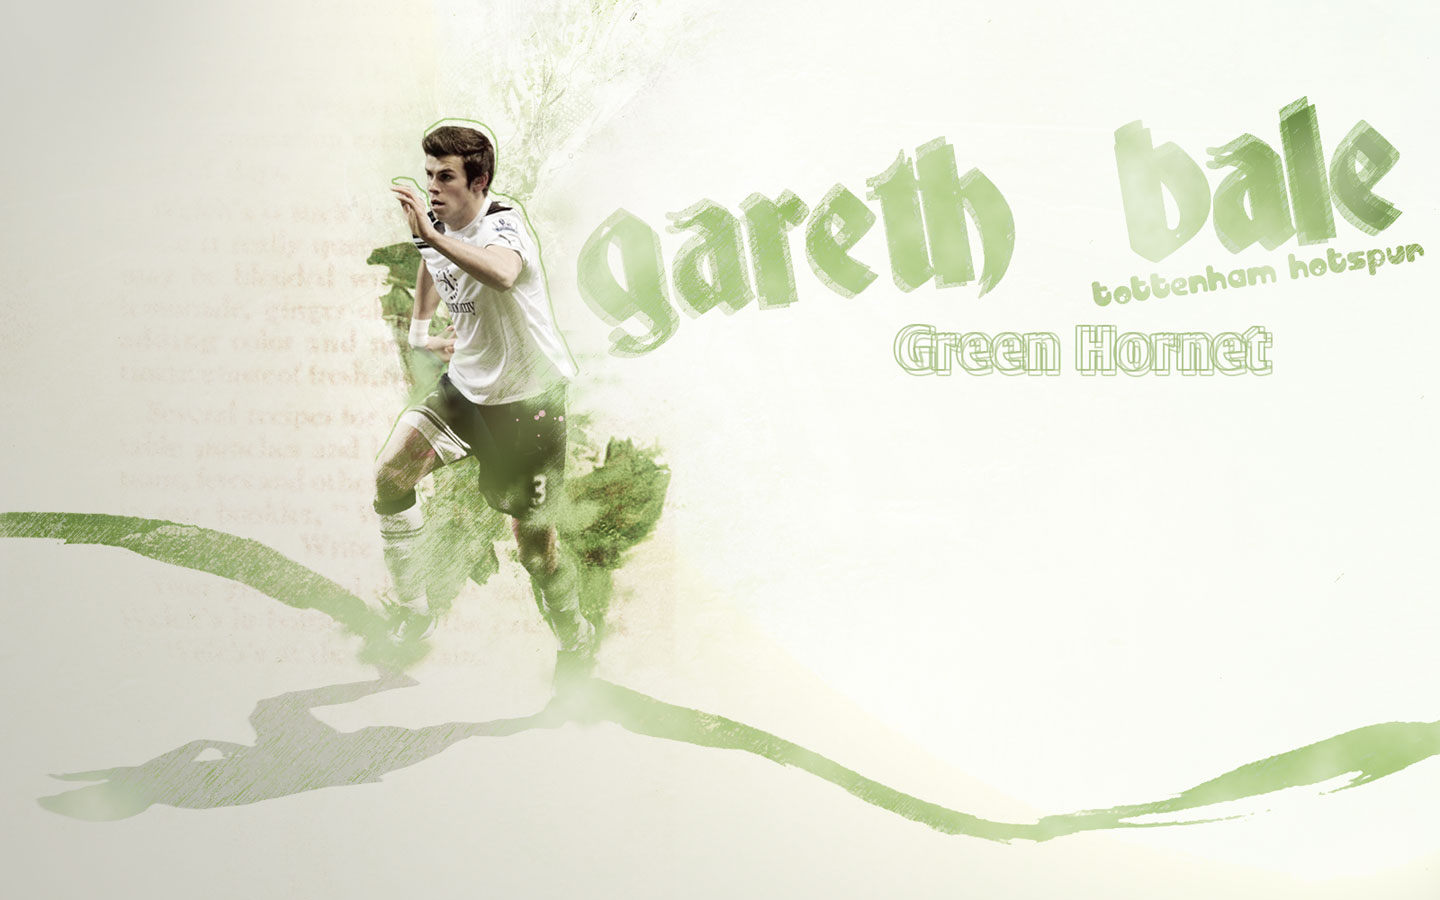 Football: Gareth Bale Hd & HQ Wallpapers 2013